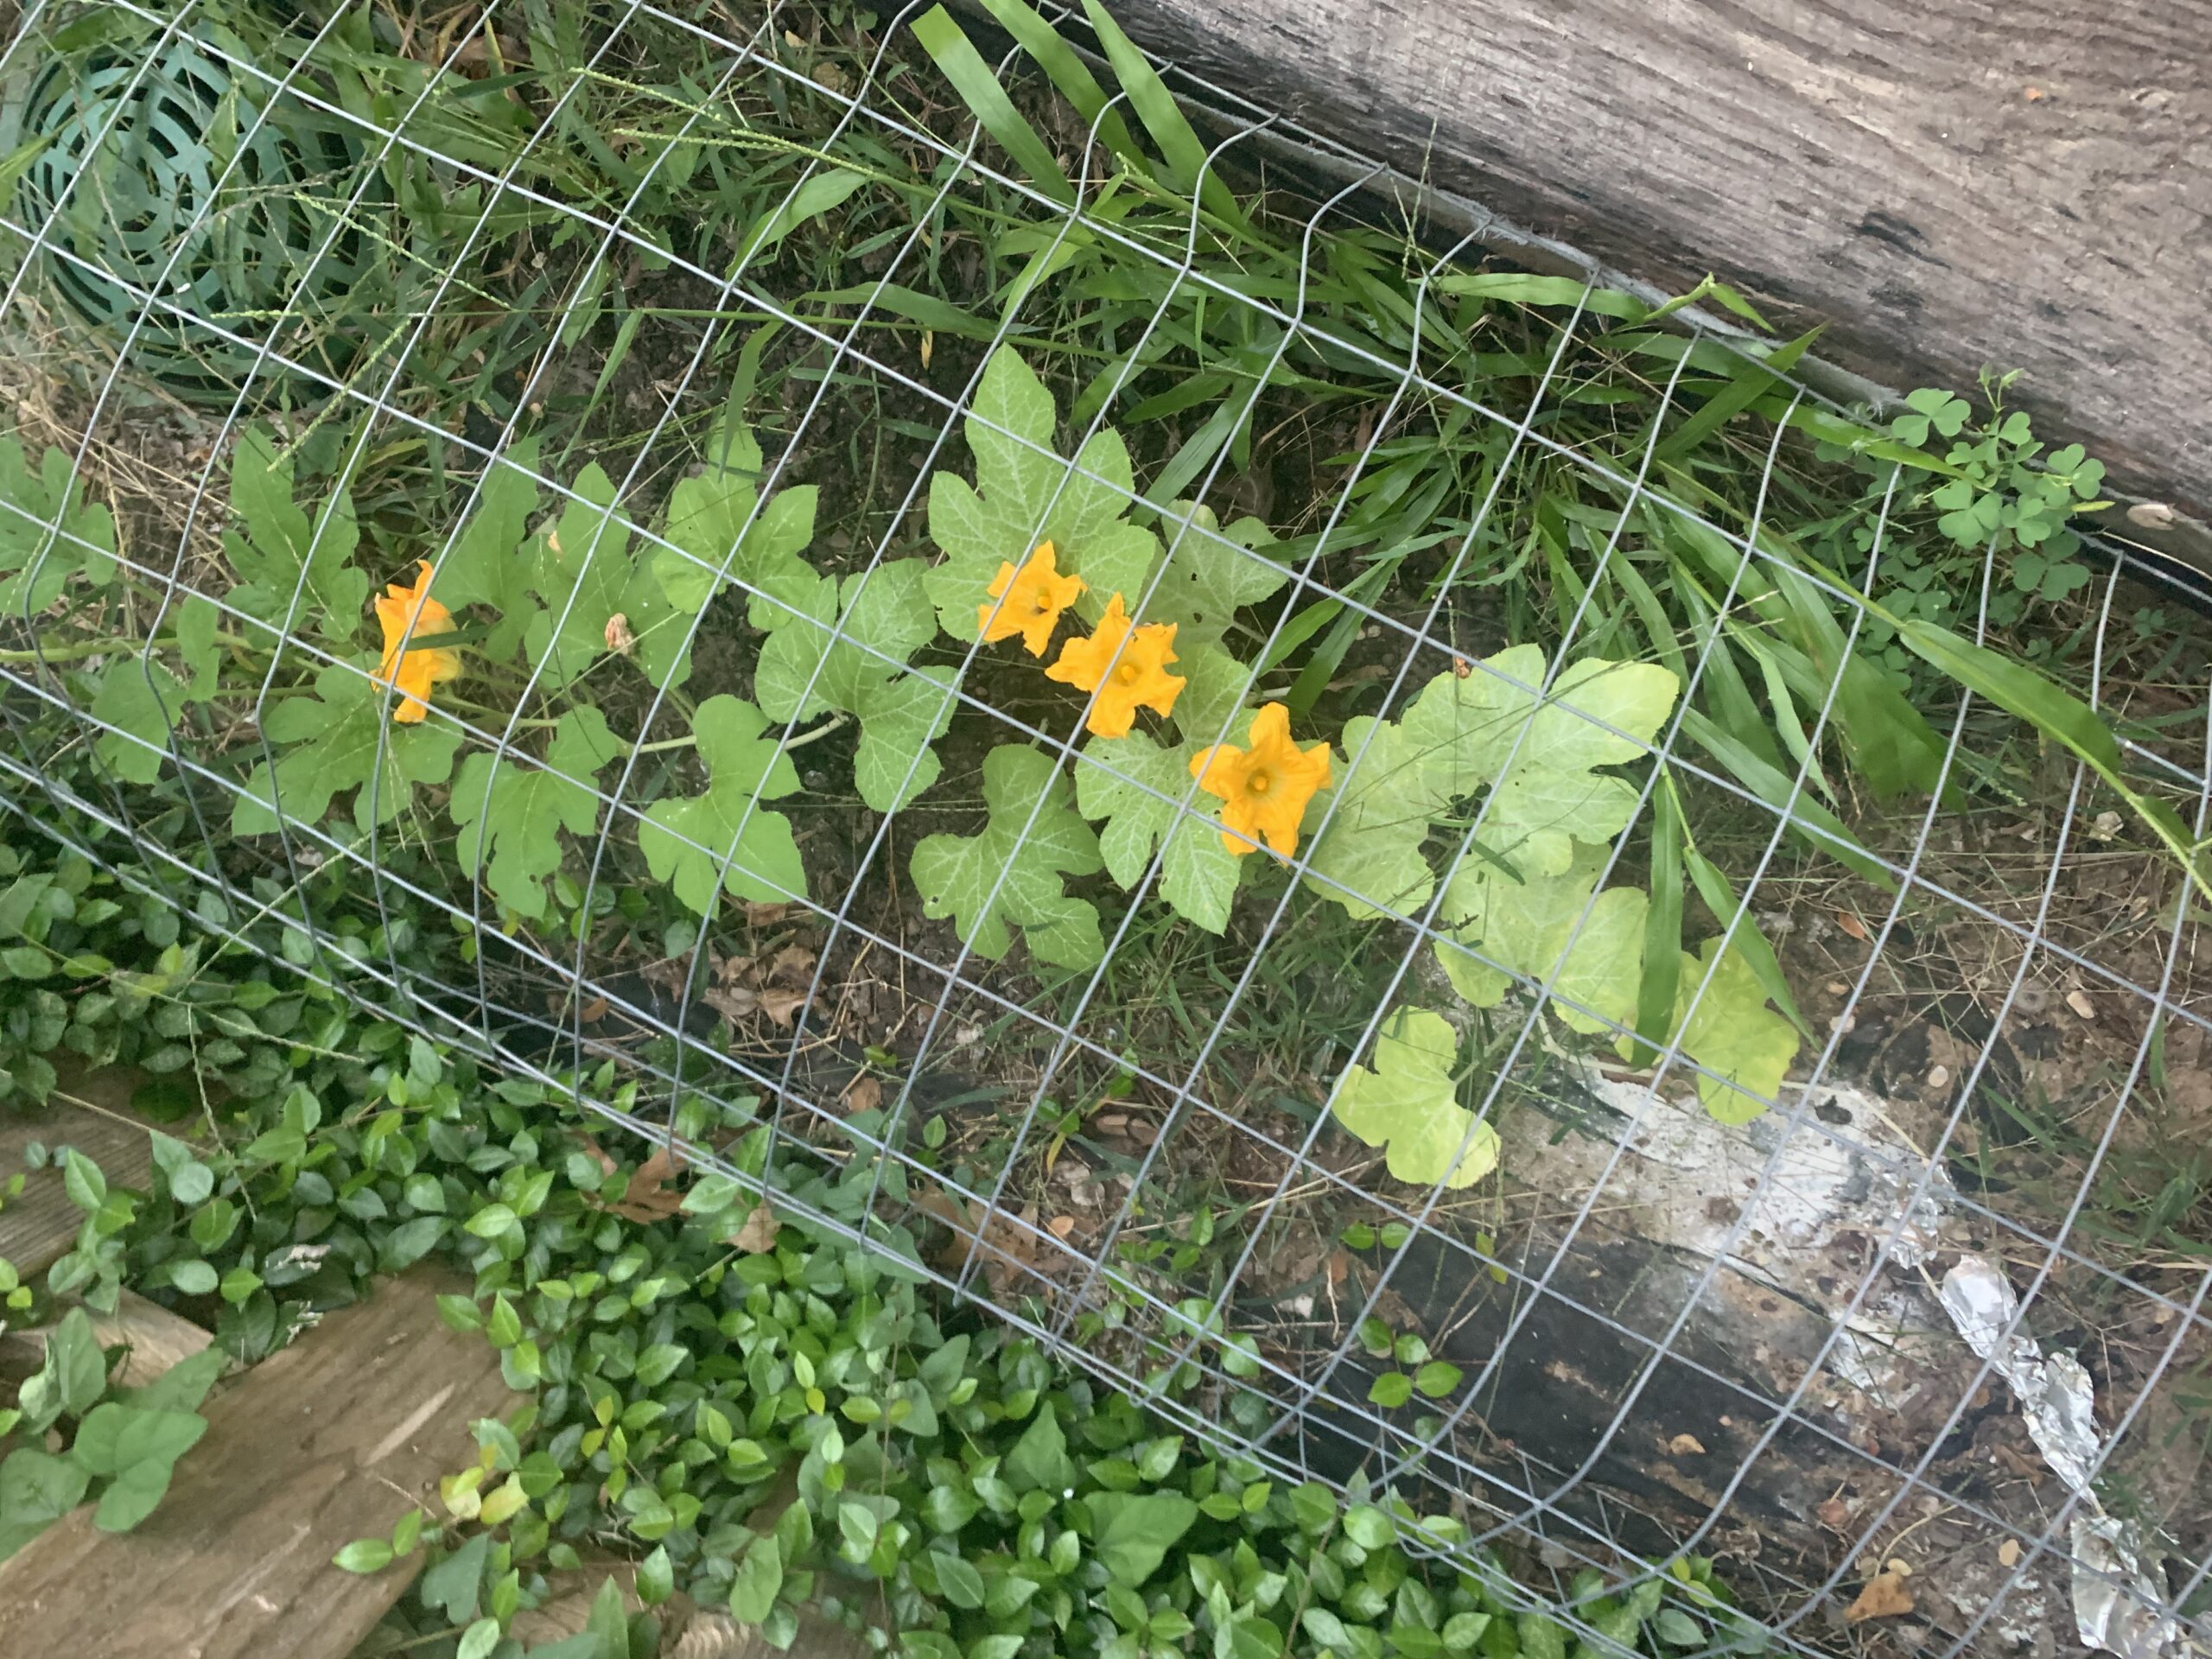 Well protected pumpkin plants under a bent fencing.